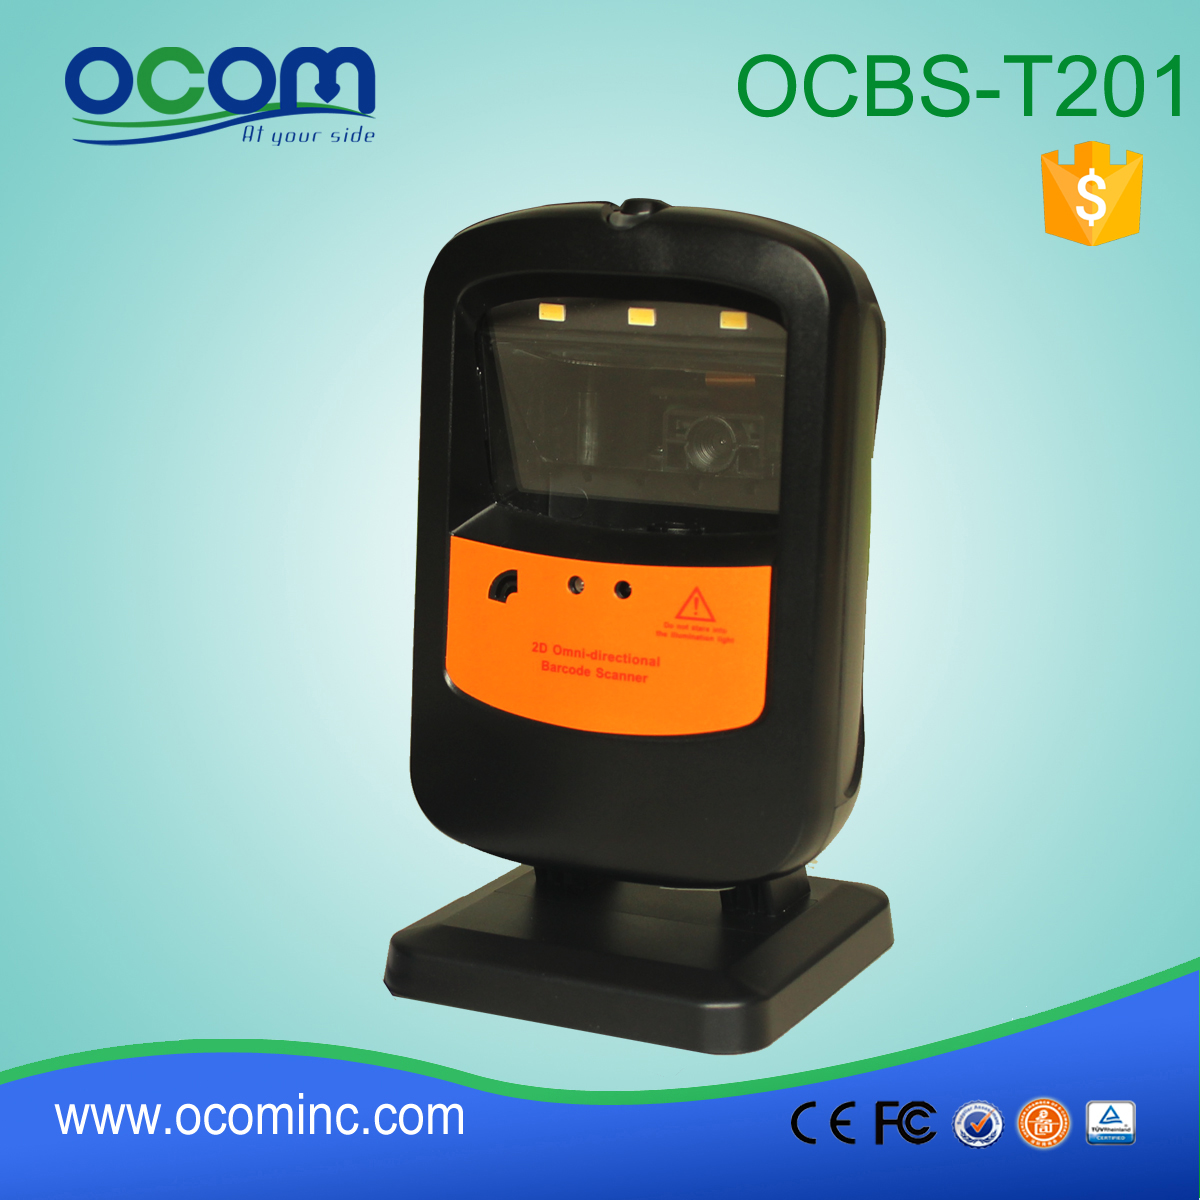 OCBs-T201: междугородной сканер штрих-кода Mini USB, штрих-код читателя цена